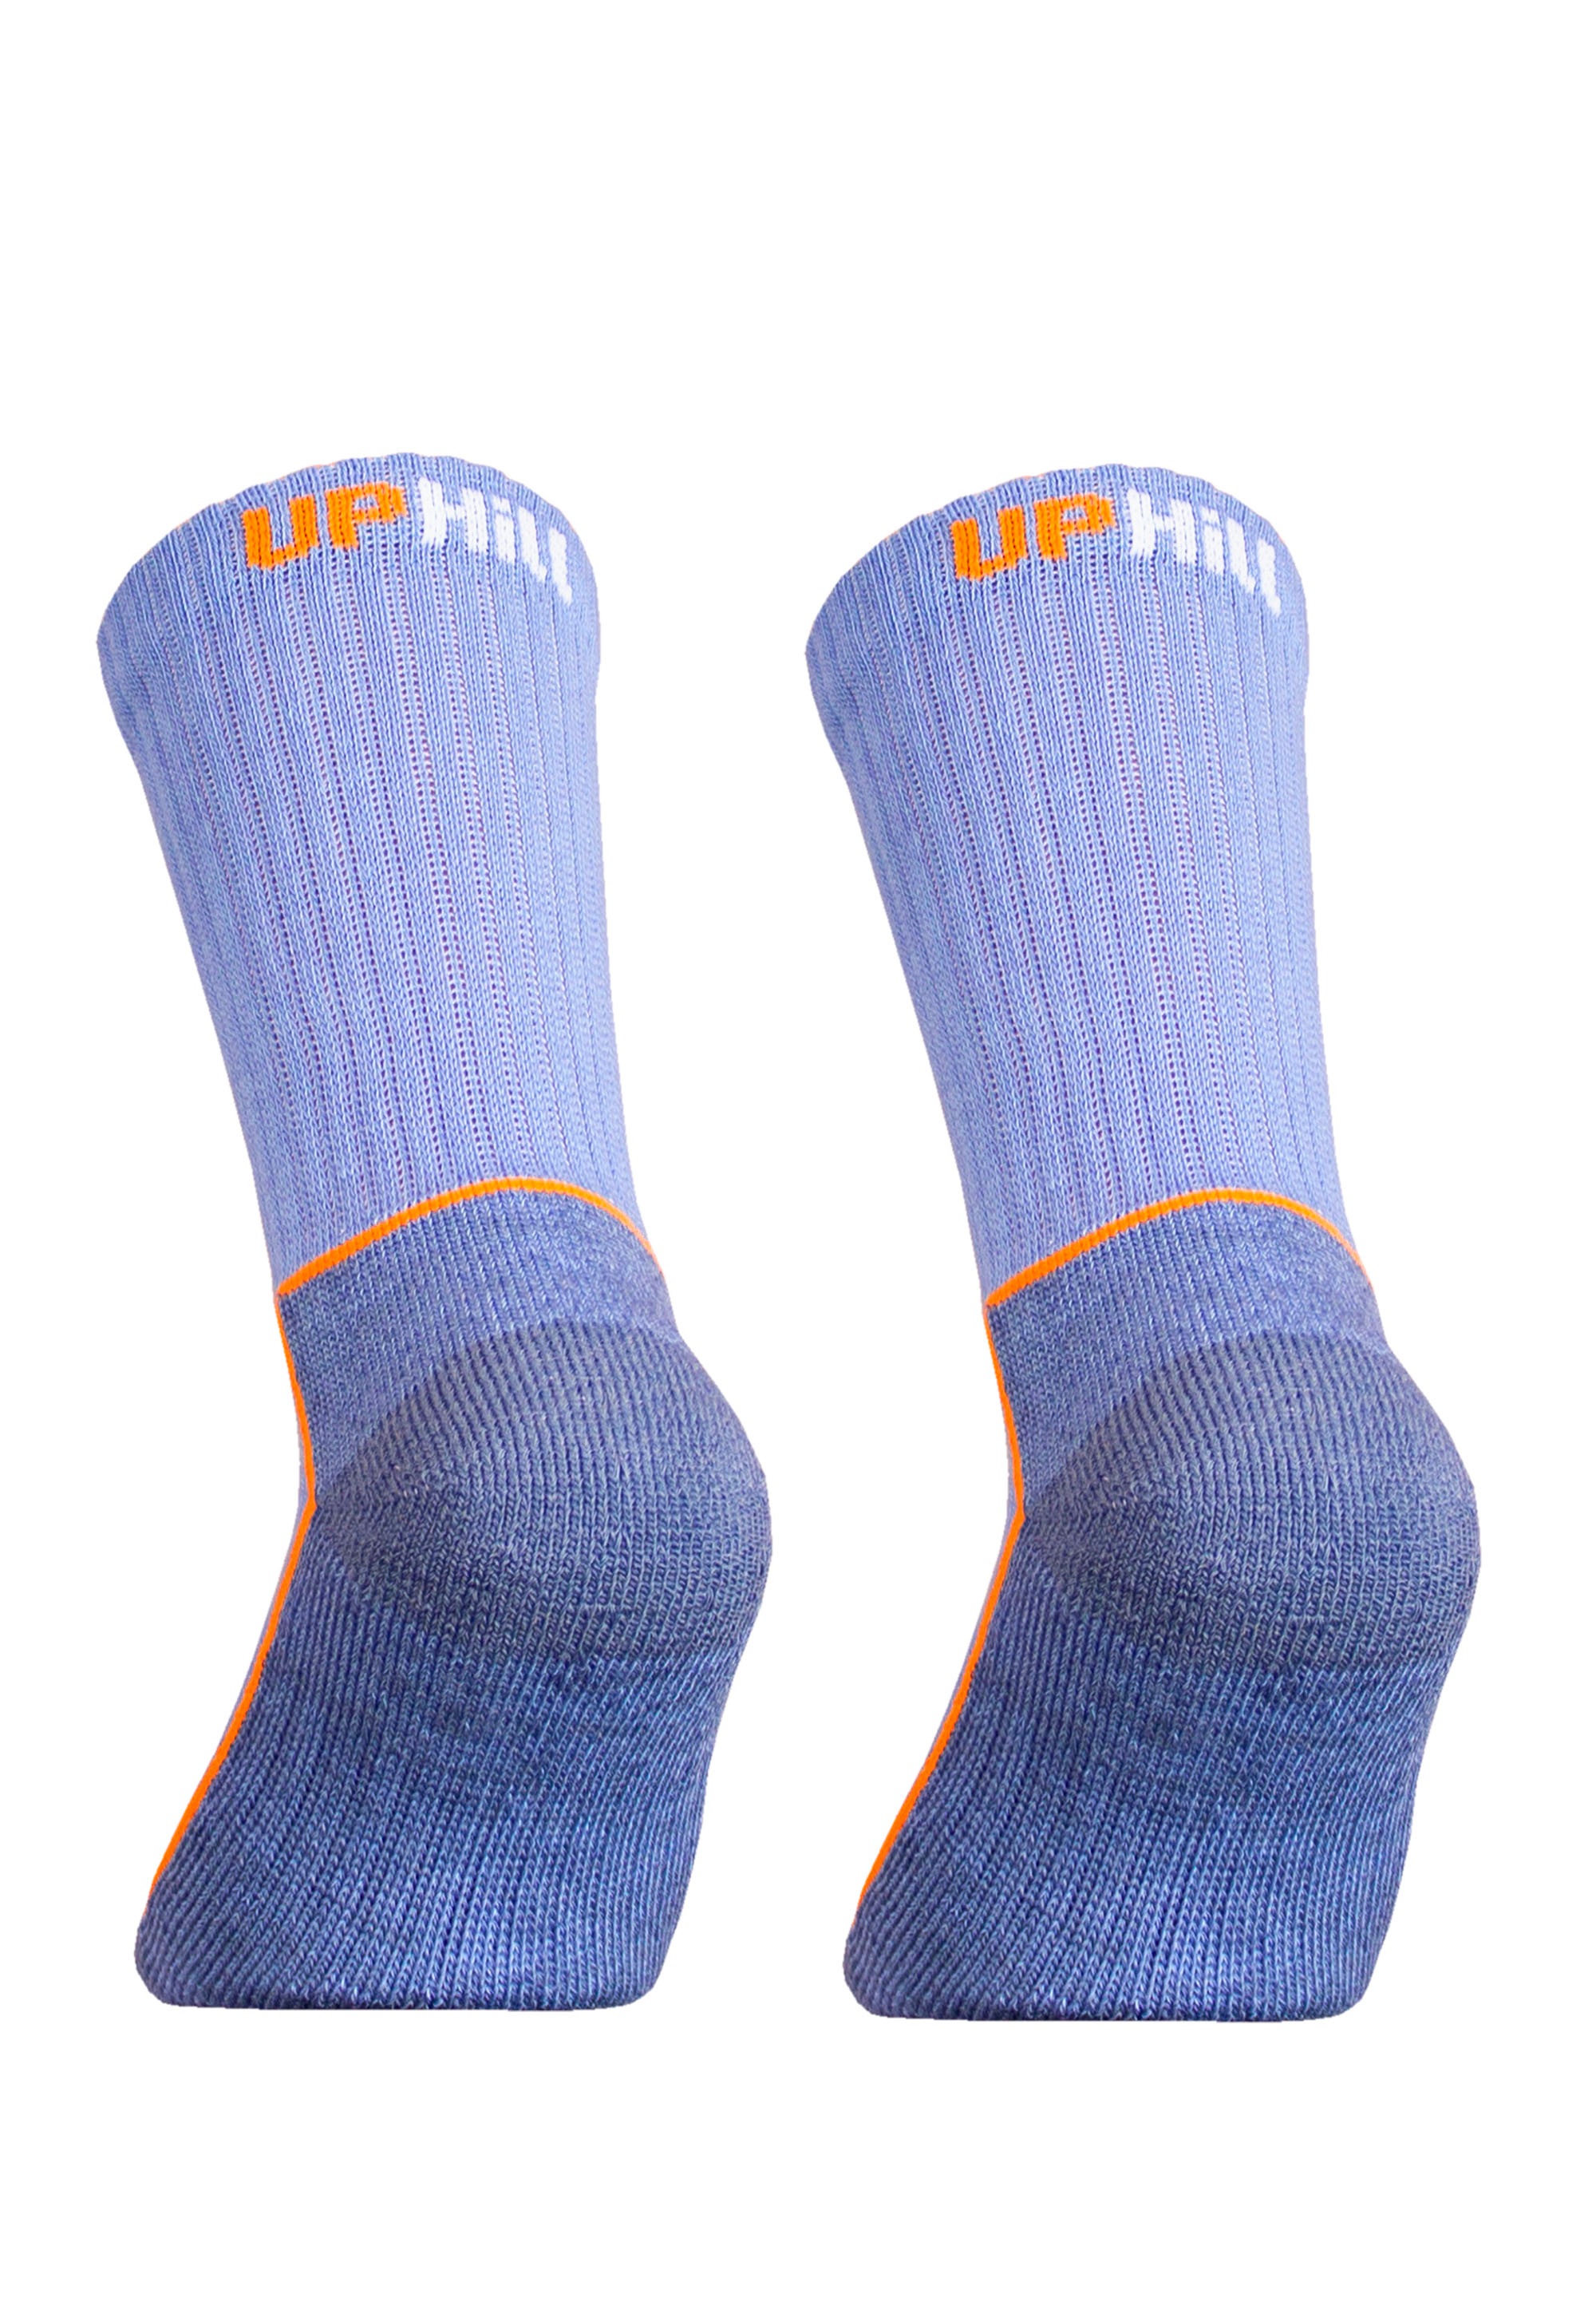 UphillSport Socken SAANA (2 mit Paar) 2er-Pack im JR Flextech-Struktur